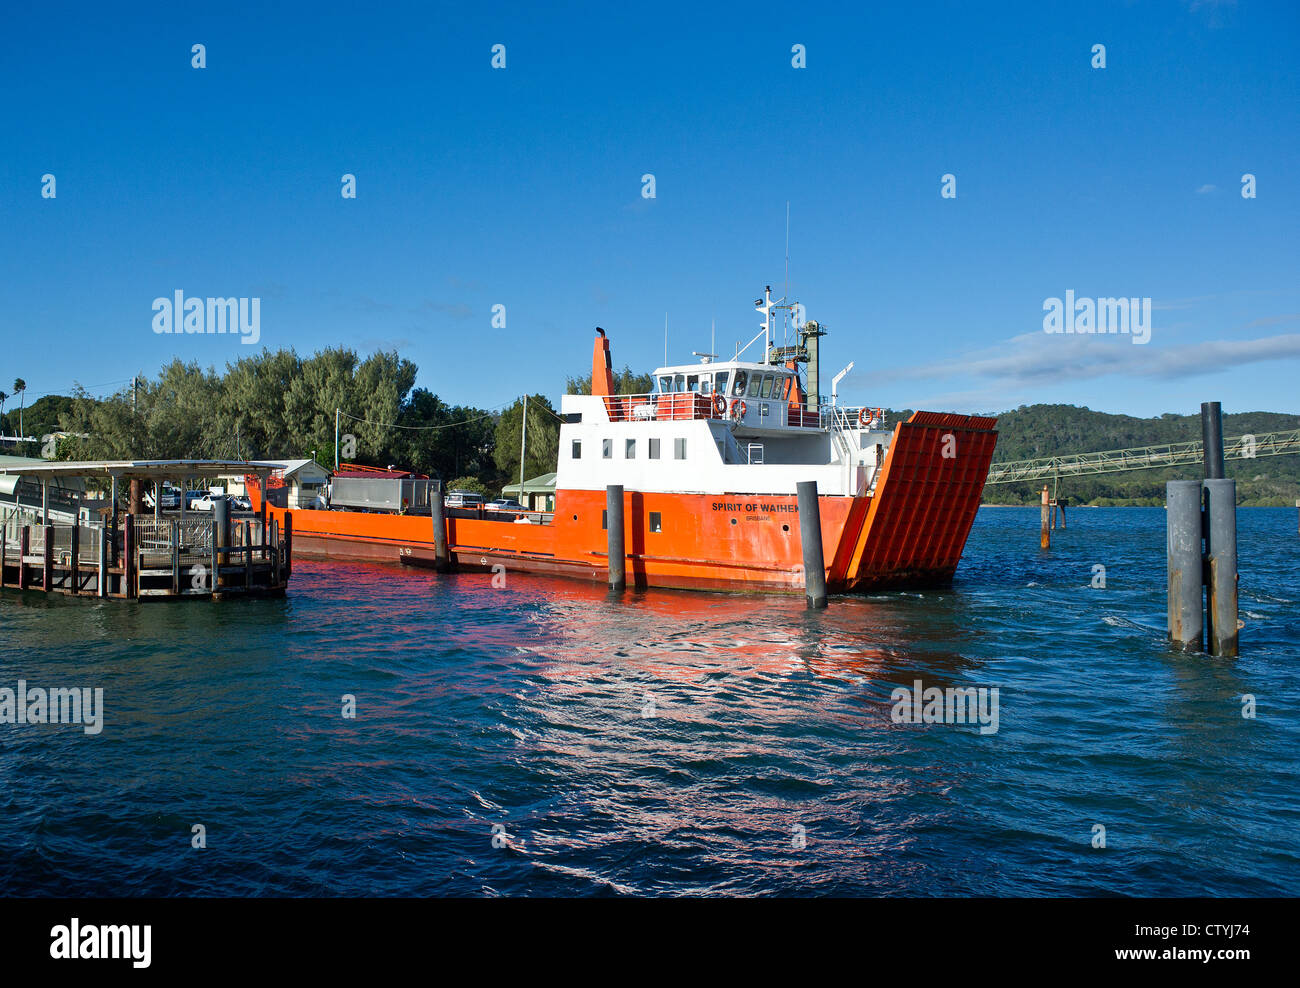 The Spirit of Waiheke ferry docked at North Stradbroke Island in Queensland, Australia. Stock Photo